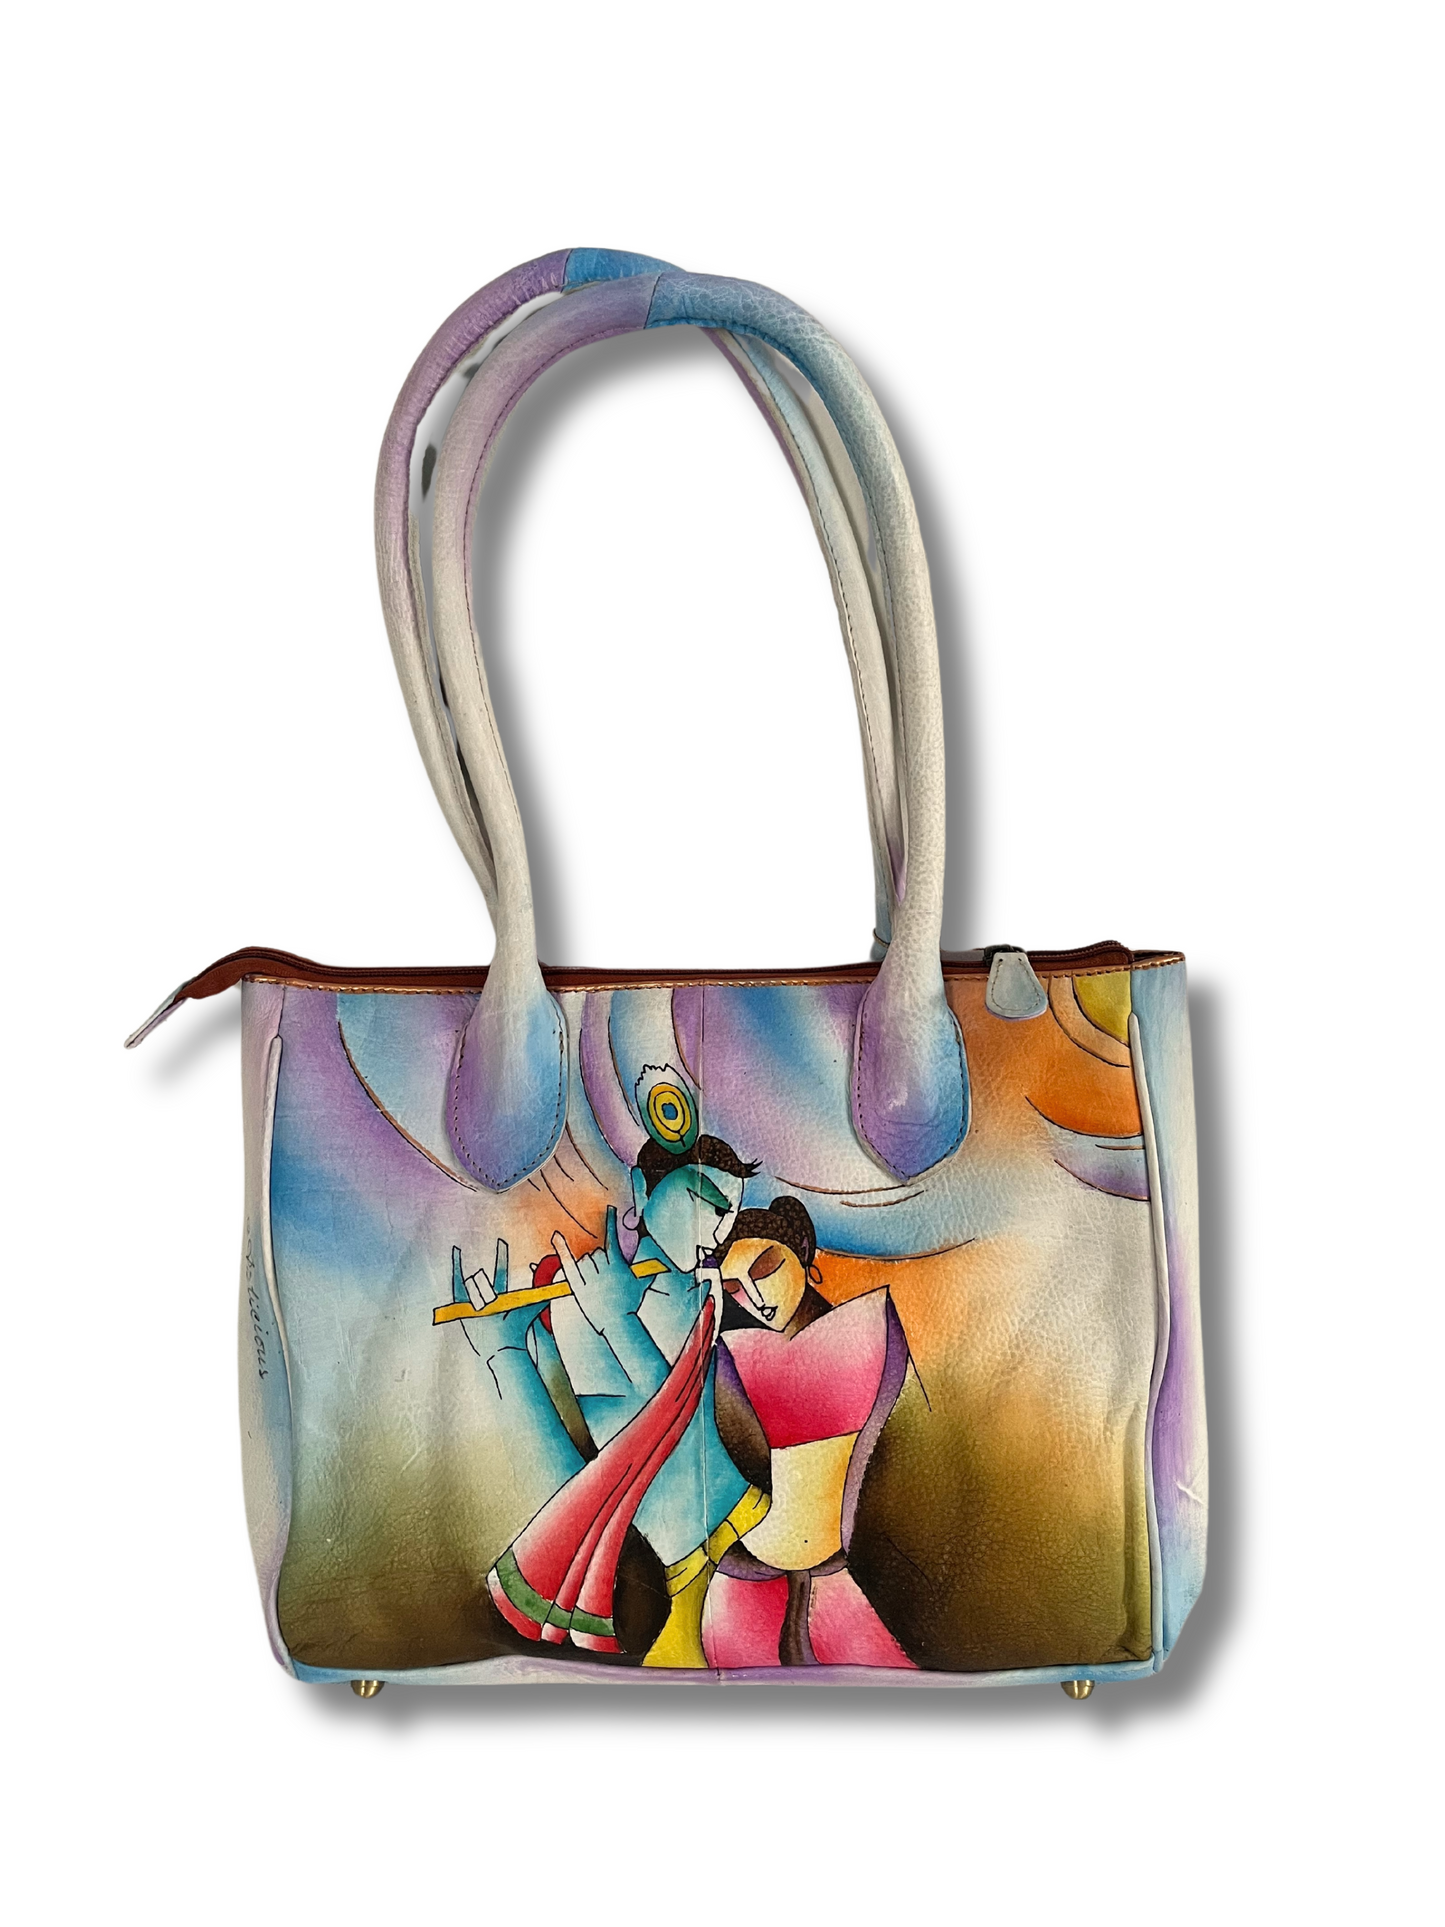 Krishna hand-painted leather bag